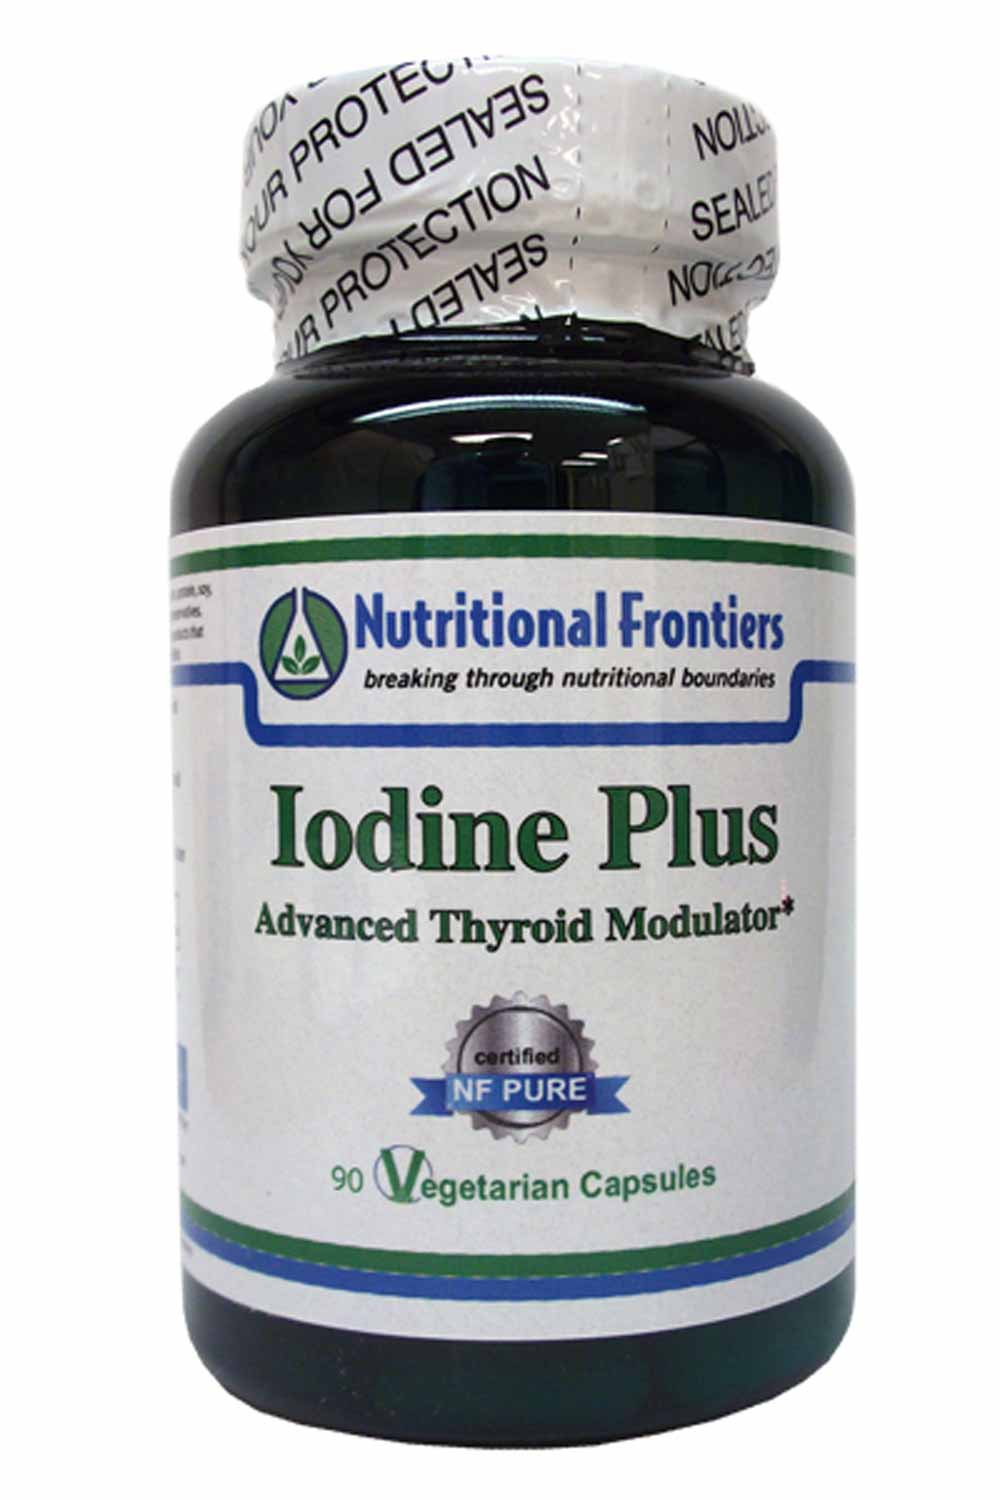 Nutritional Frontiers Iodine Plus